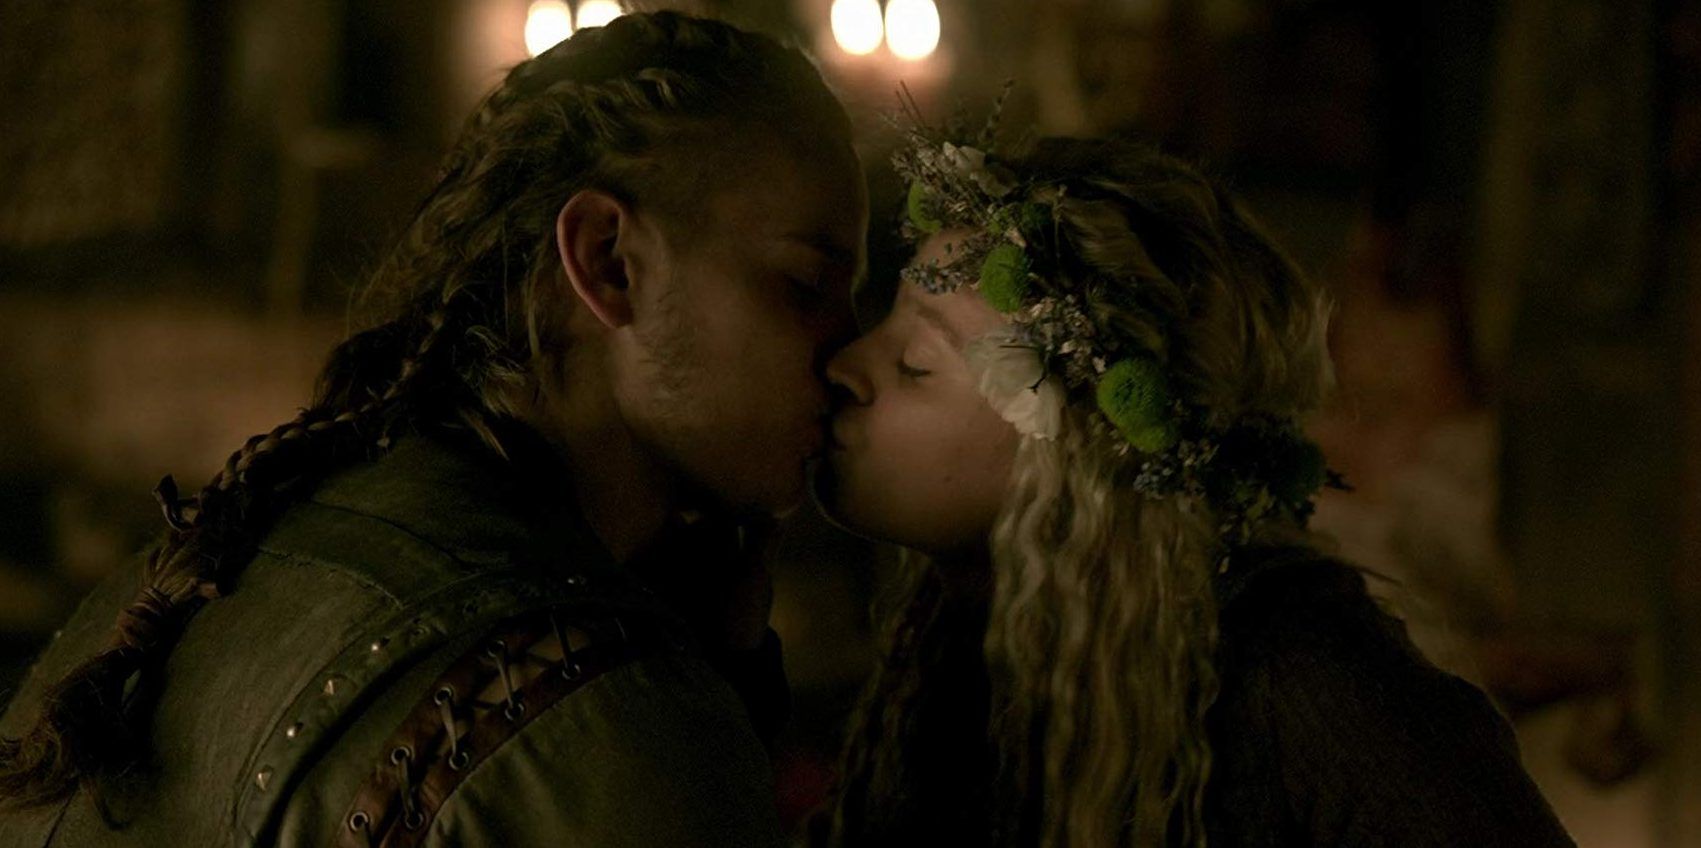 Vikings The 10 Best Episodes (According To IMDb)